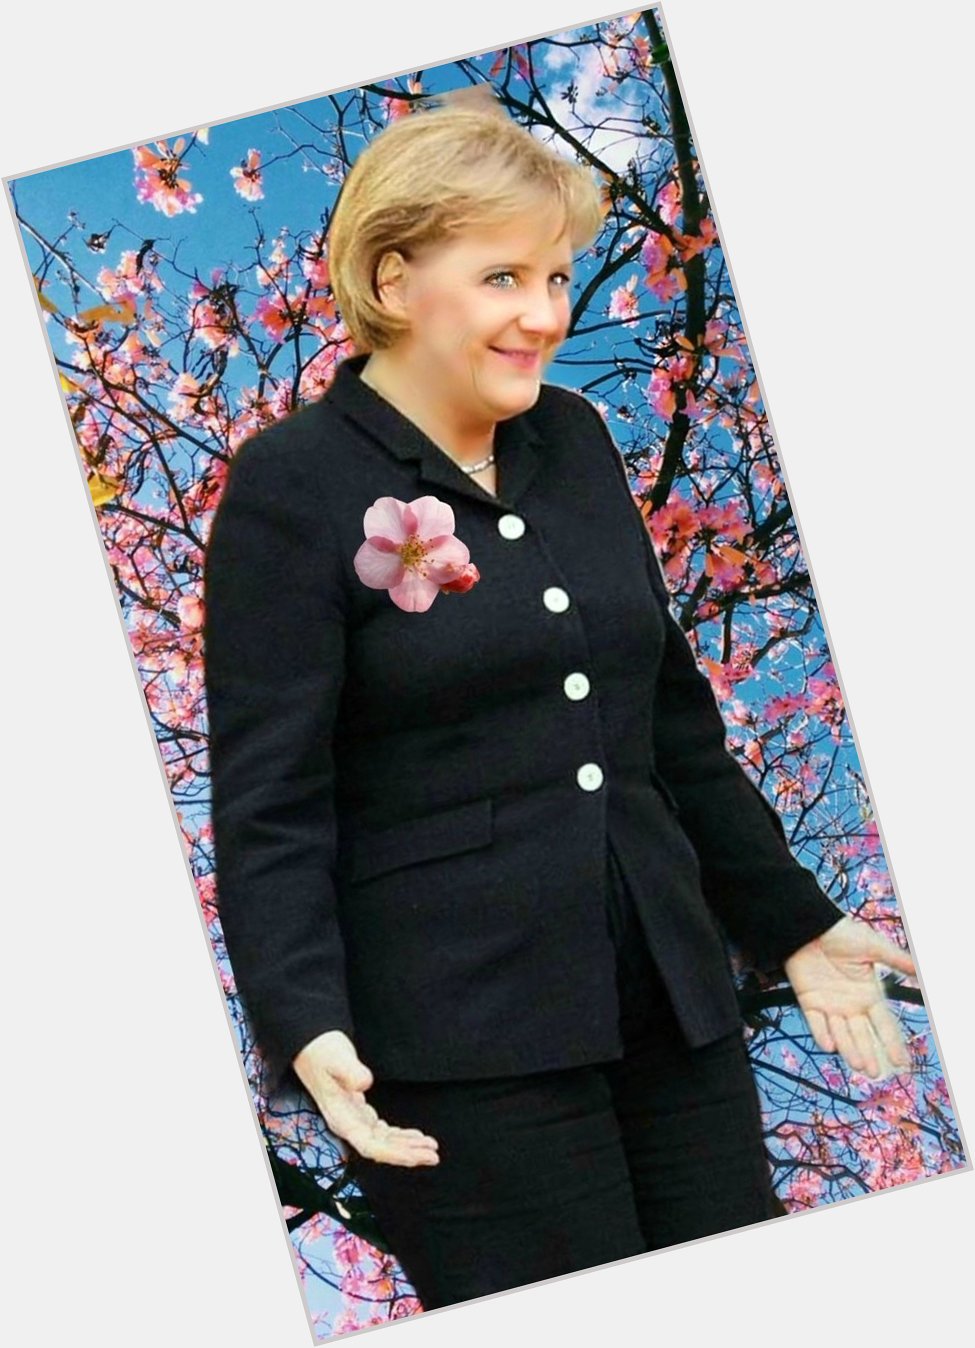  HAPPY BIRTHDAY, Chancellor Angela Merkel 